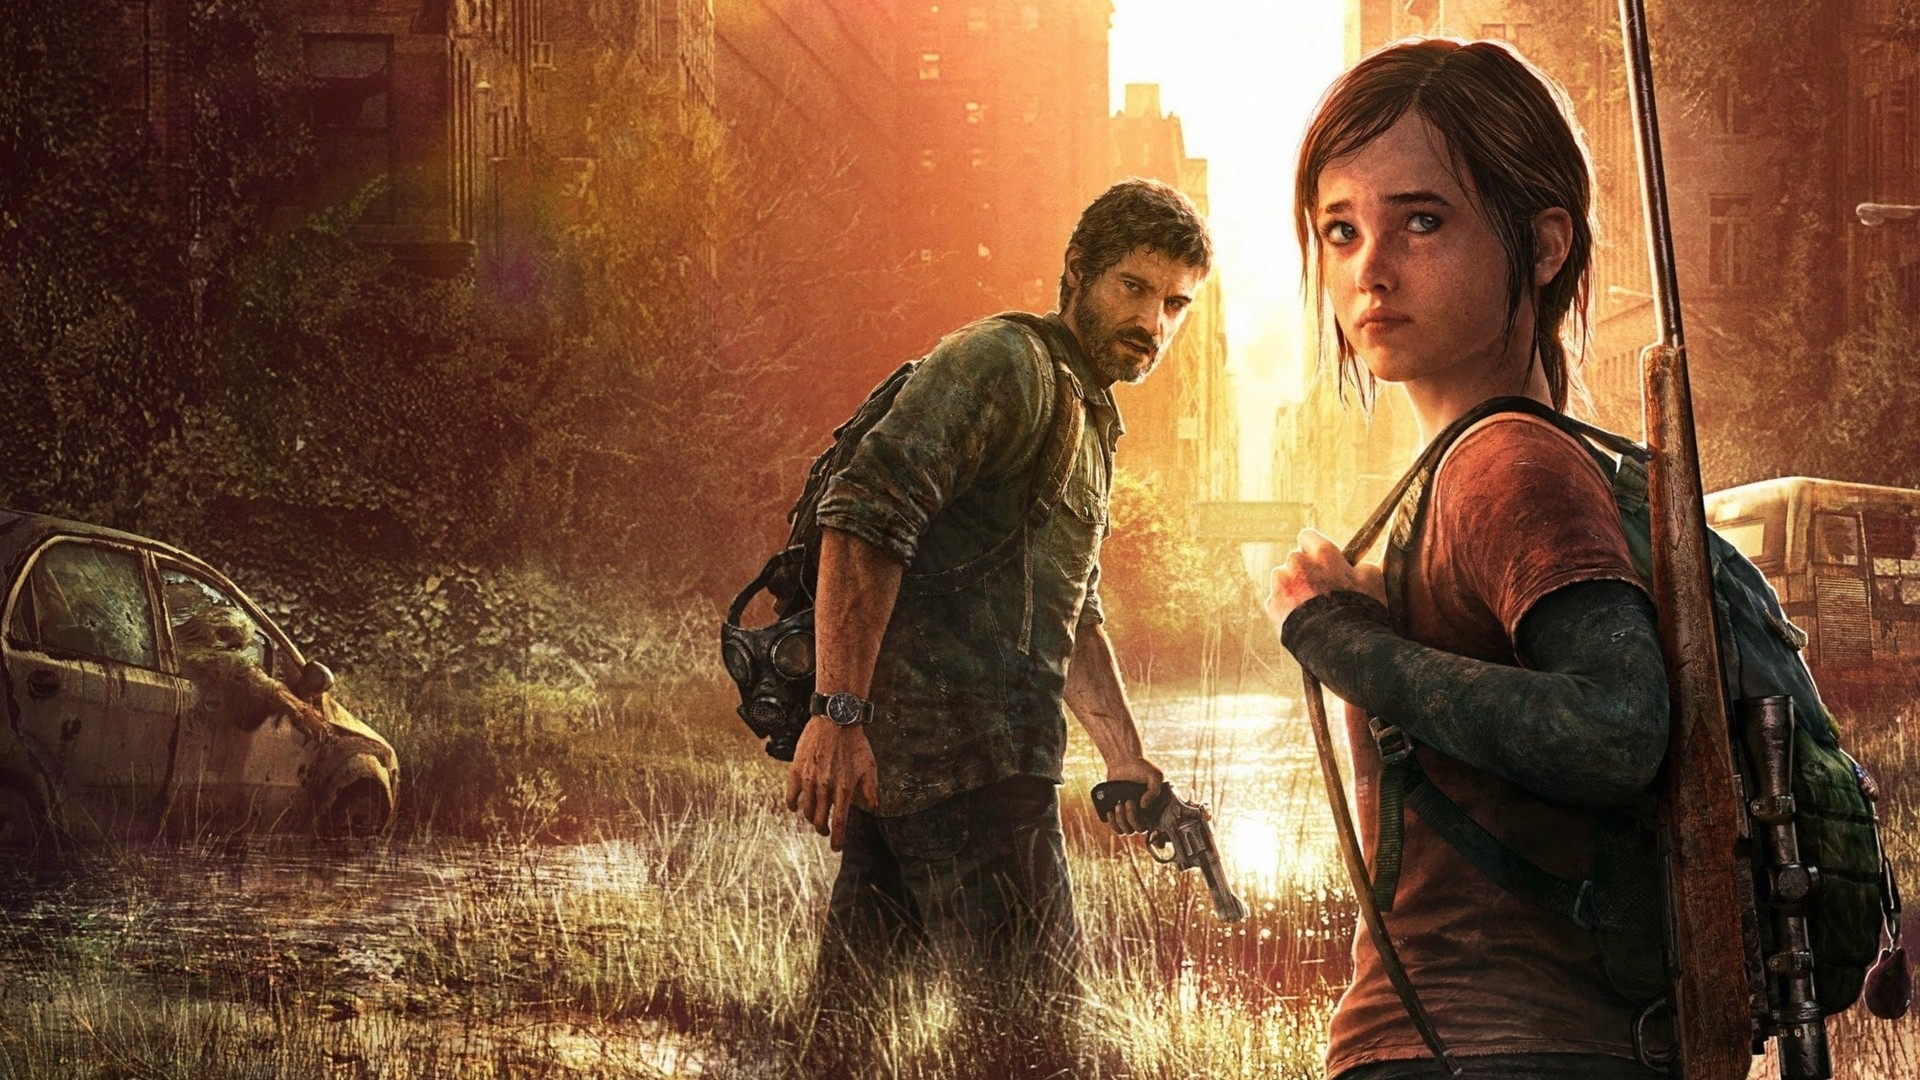 Release der The Last of Us HBO-Serie steht unmittelbar bevor Titel